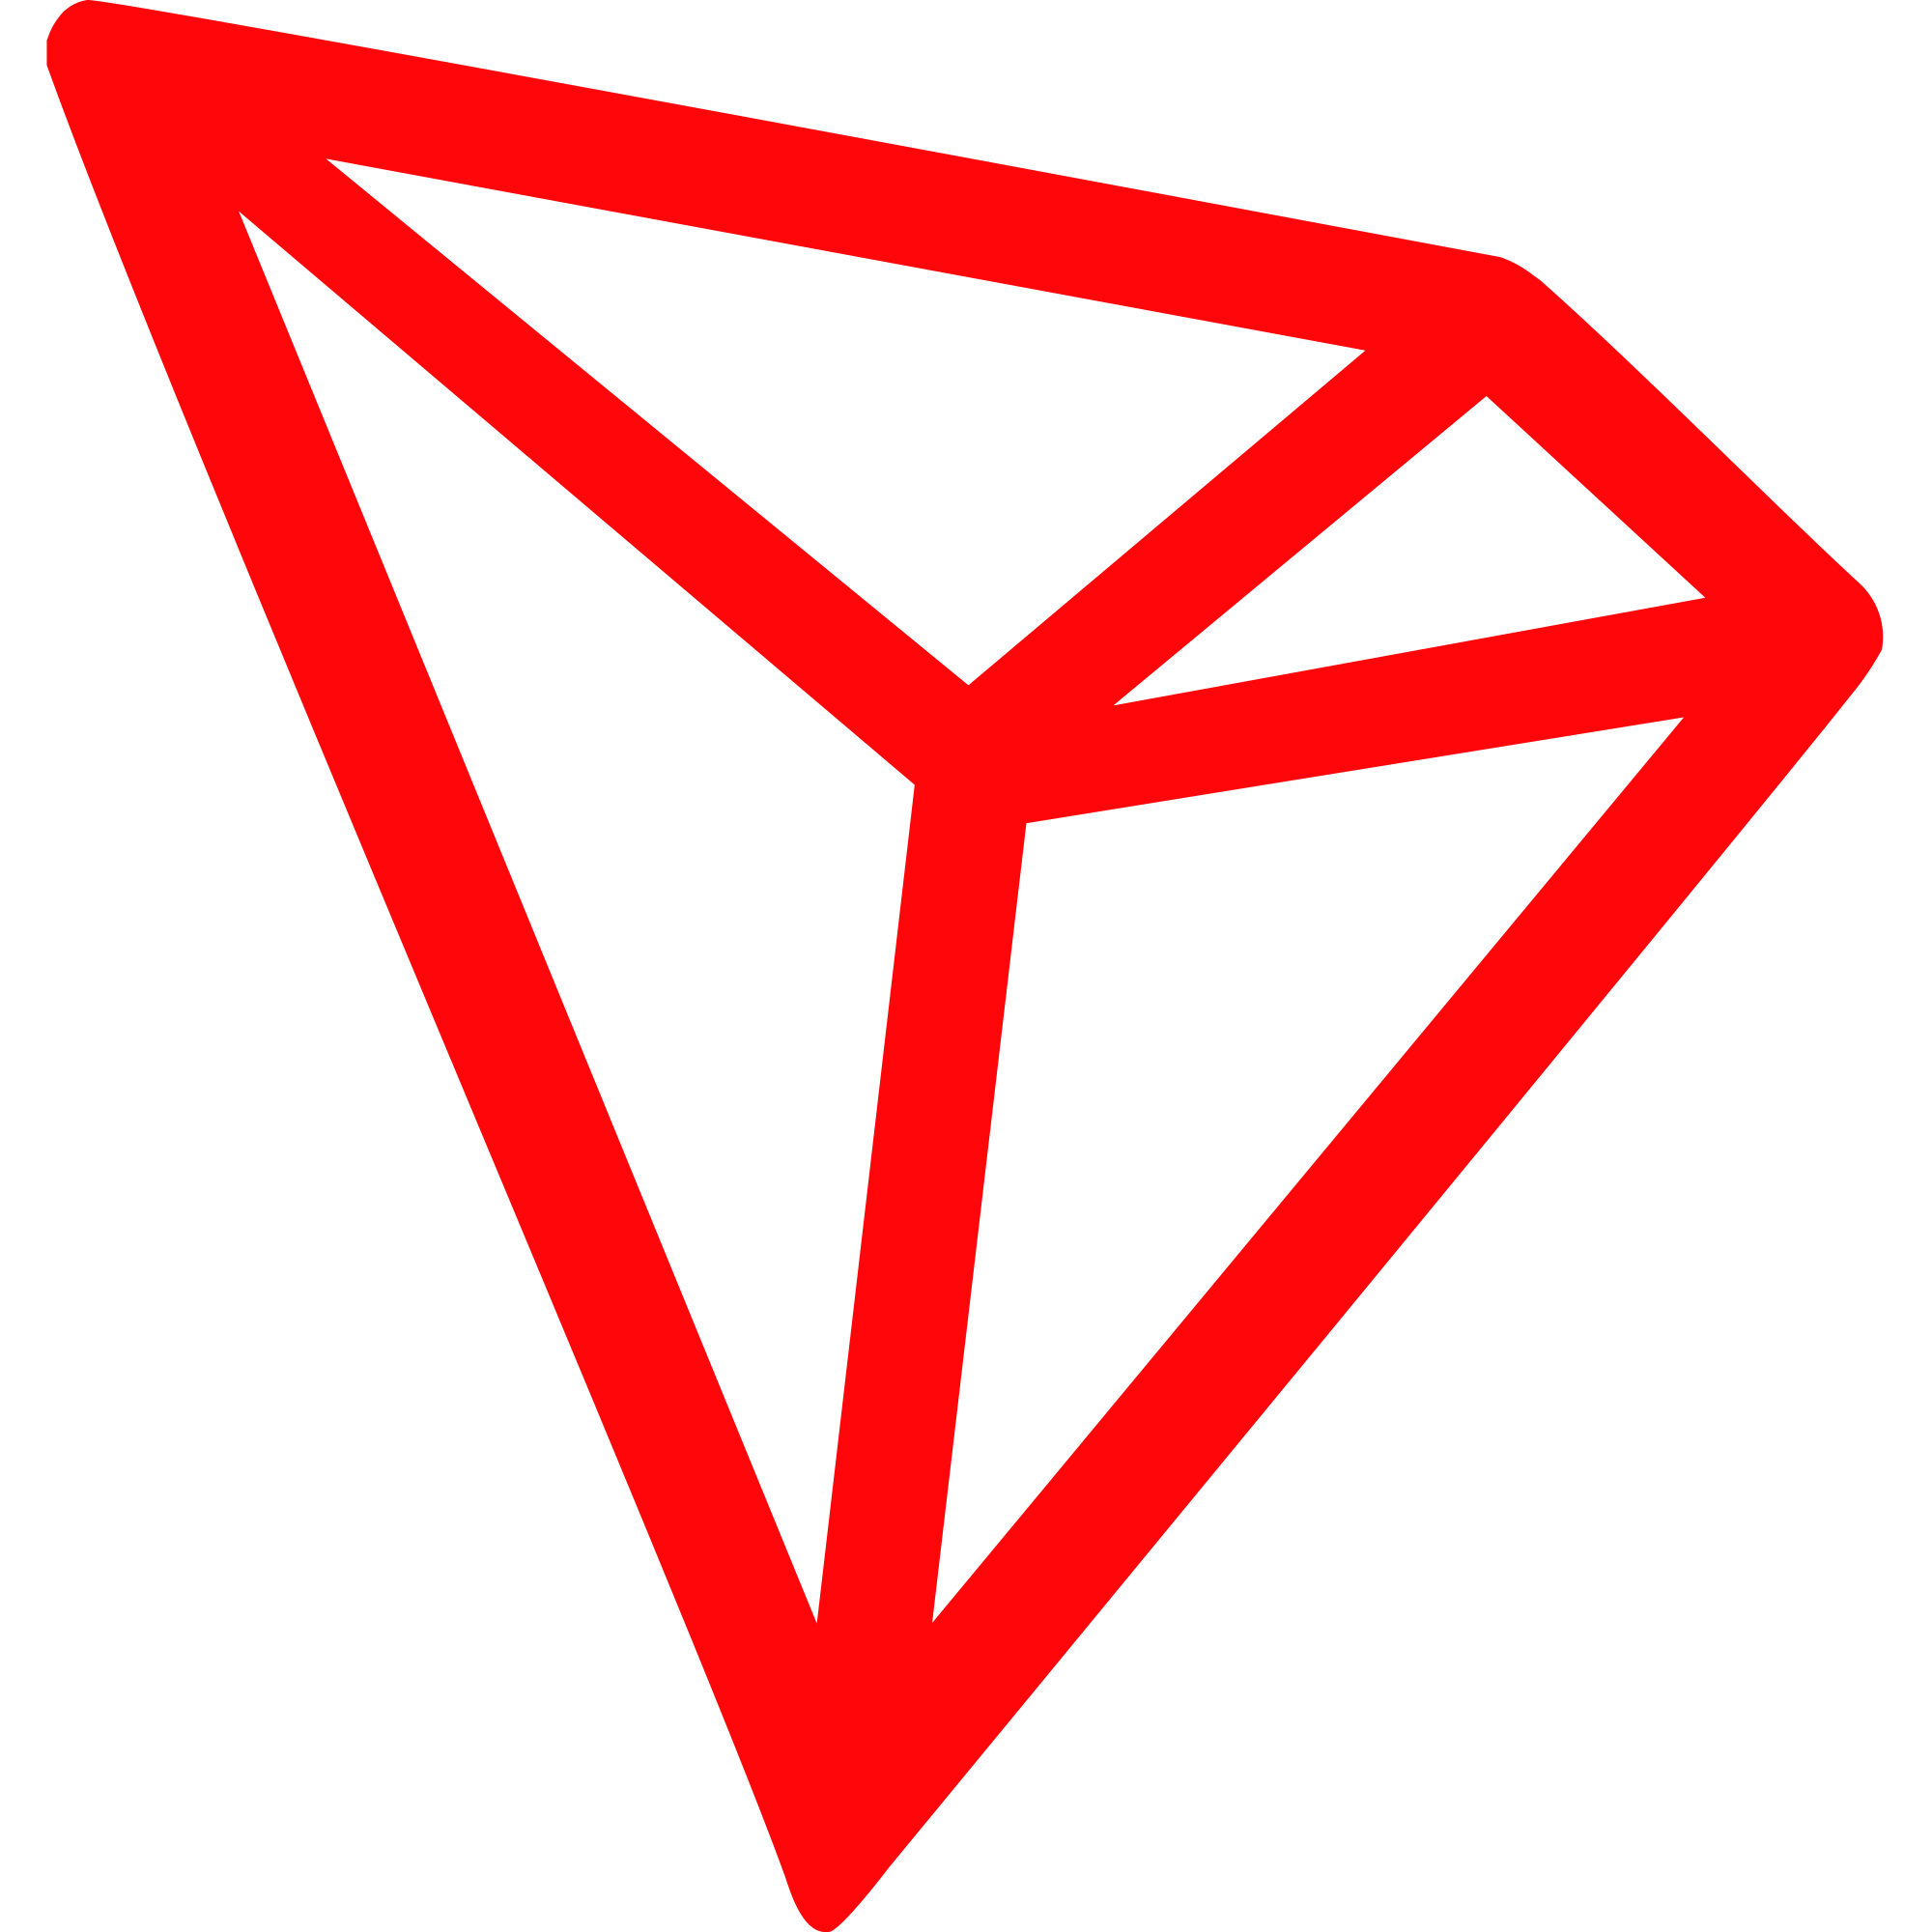 Tron logo for price prediction